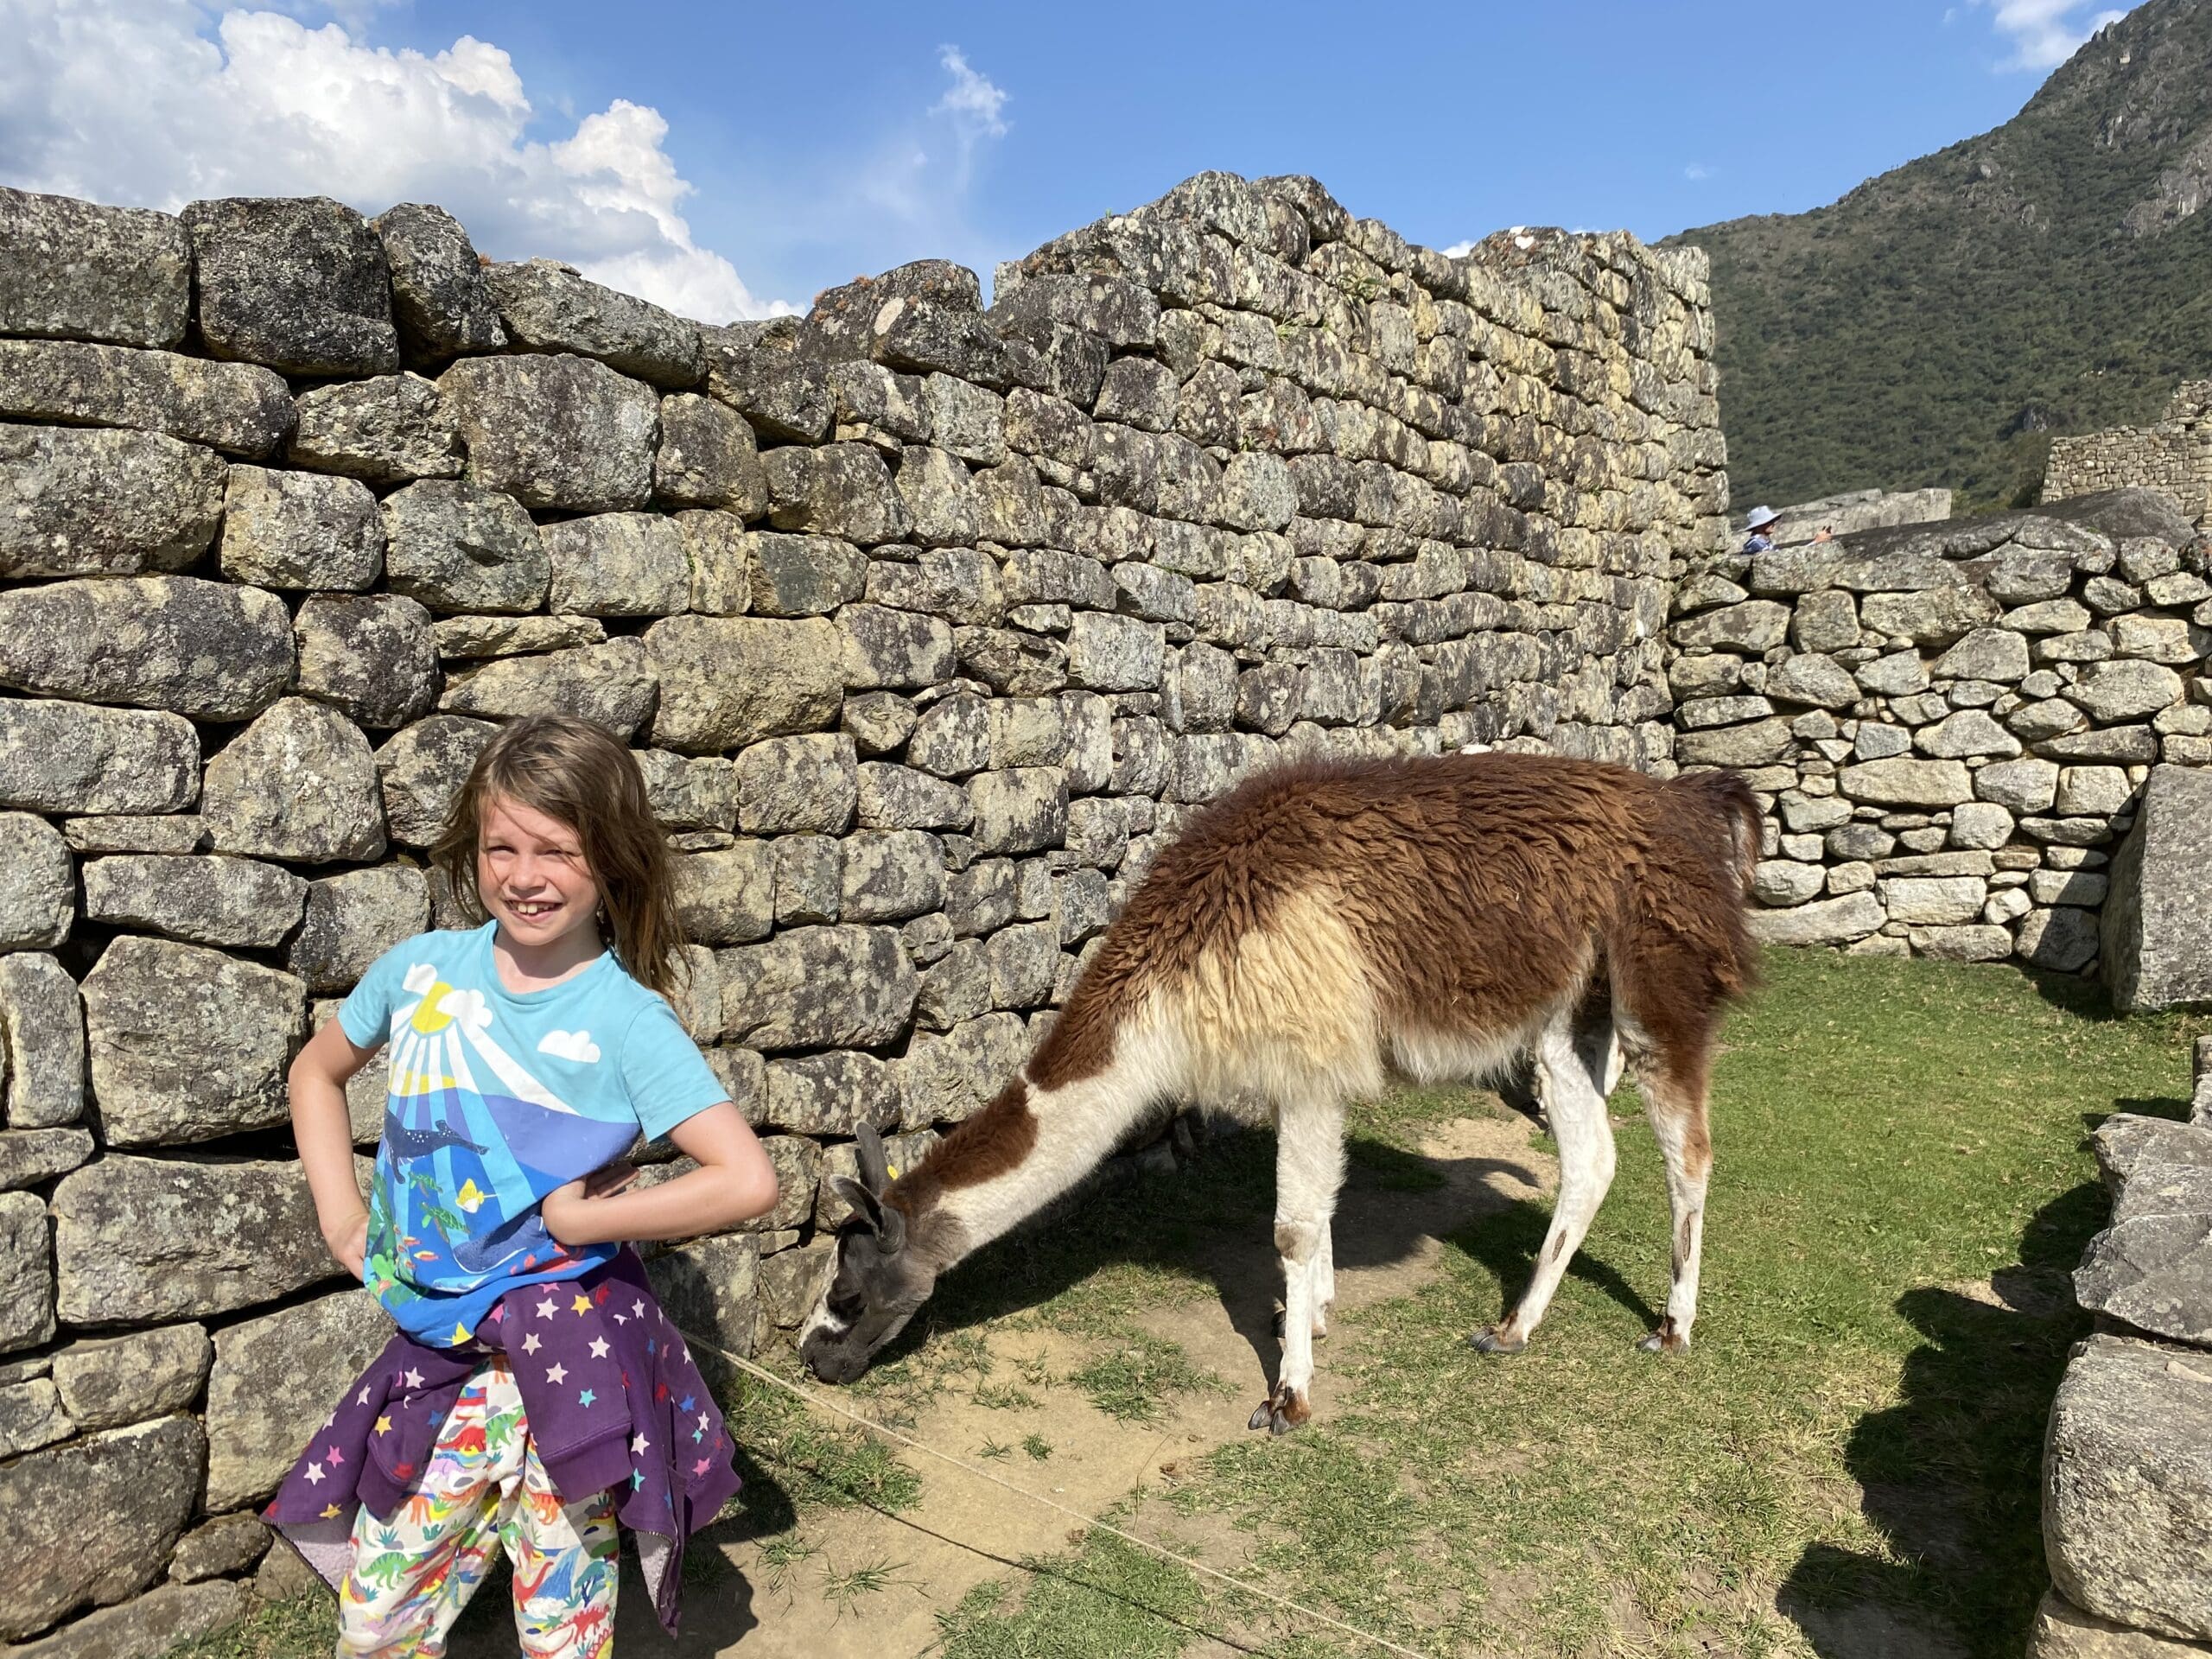 Llama and child at Machu Picchu